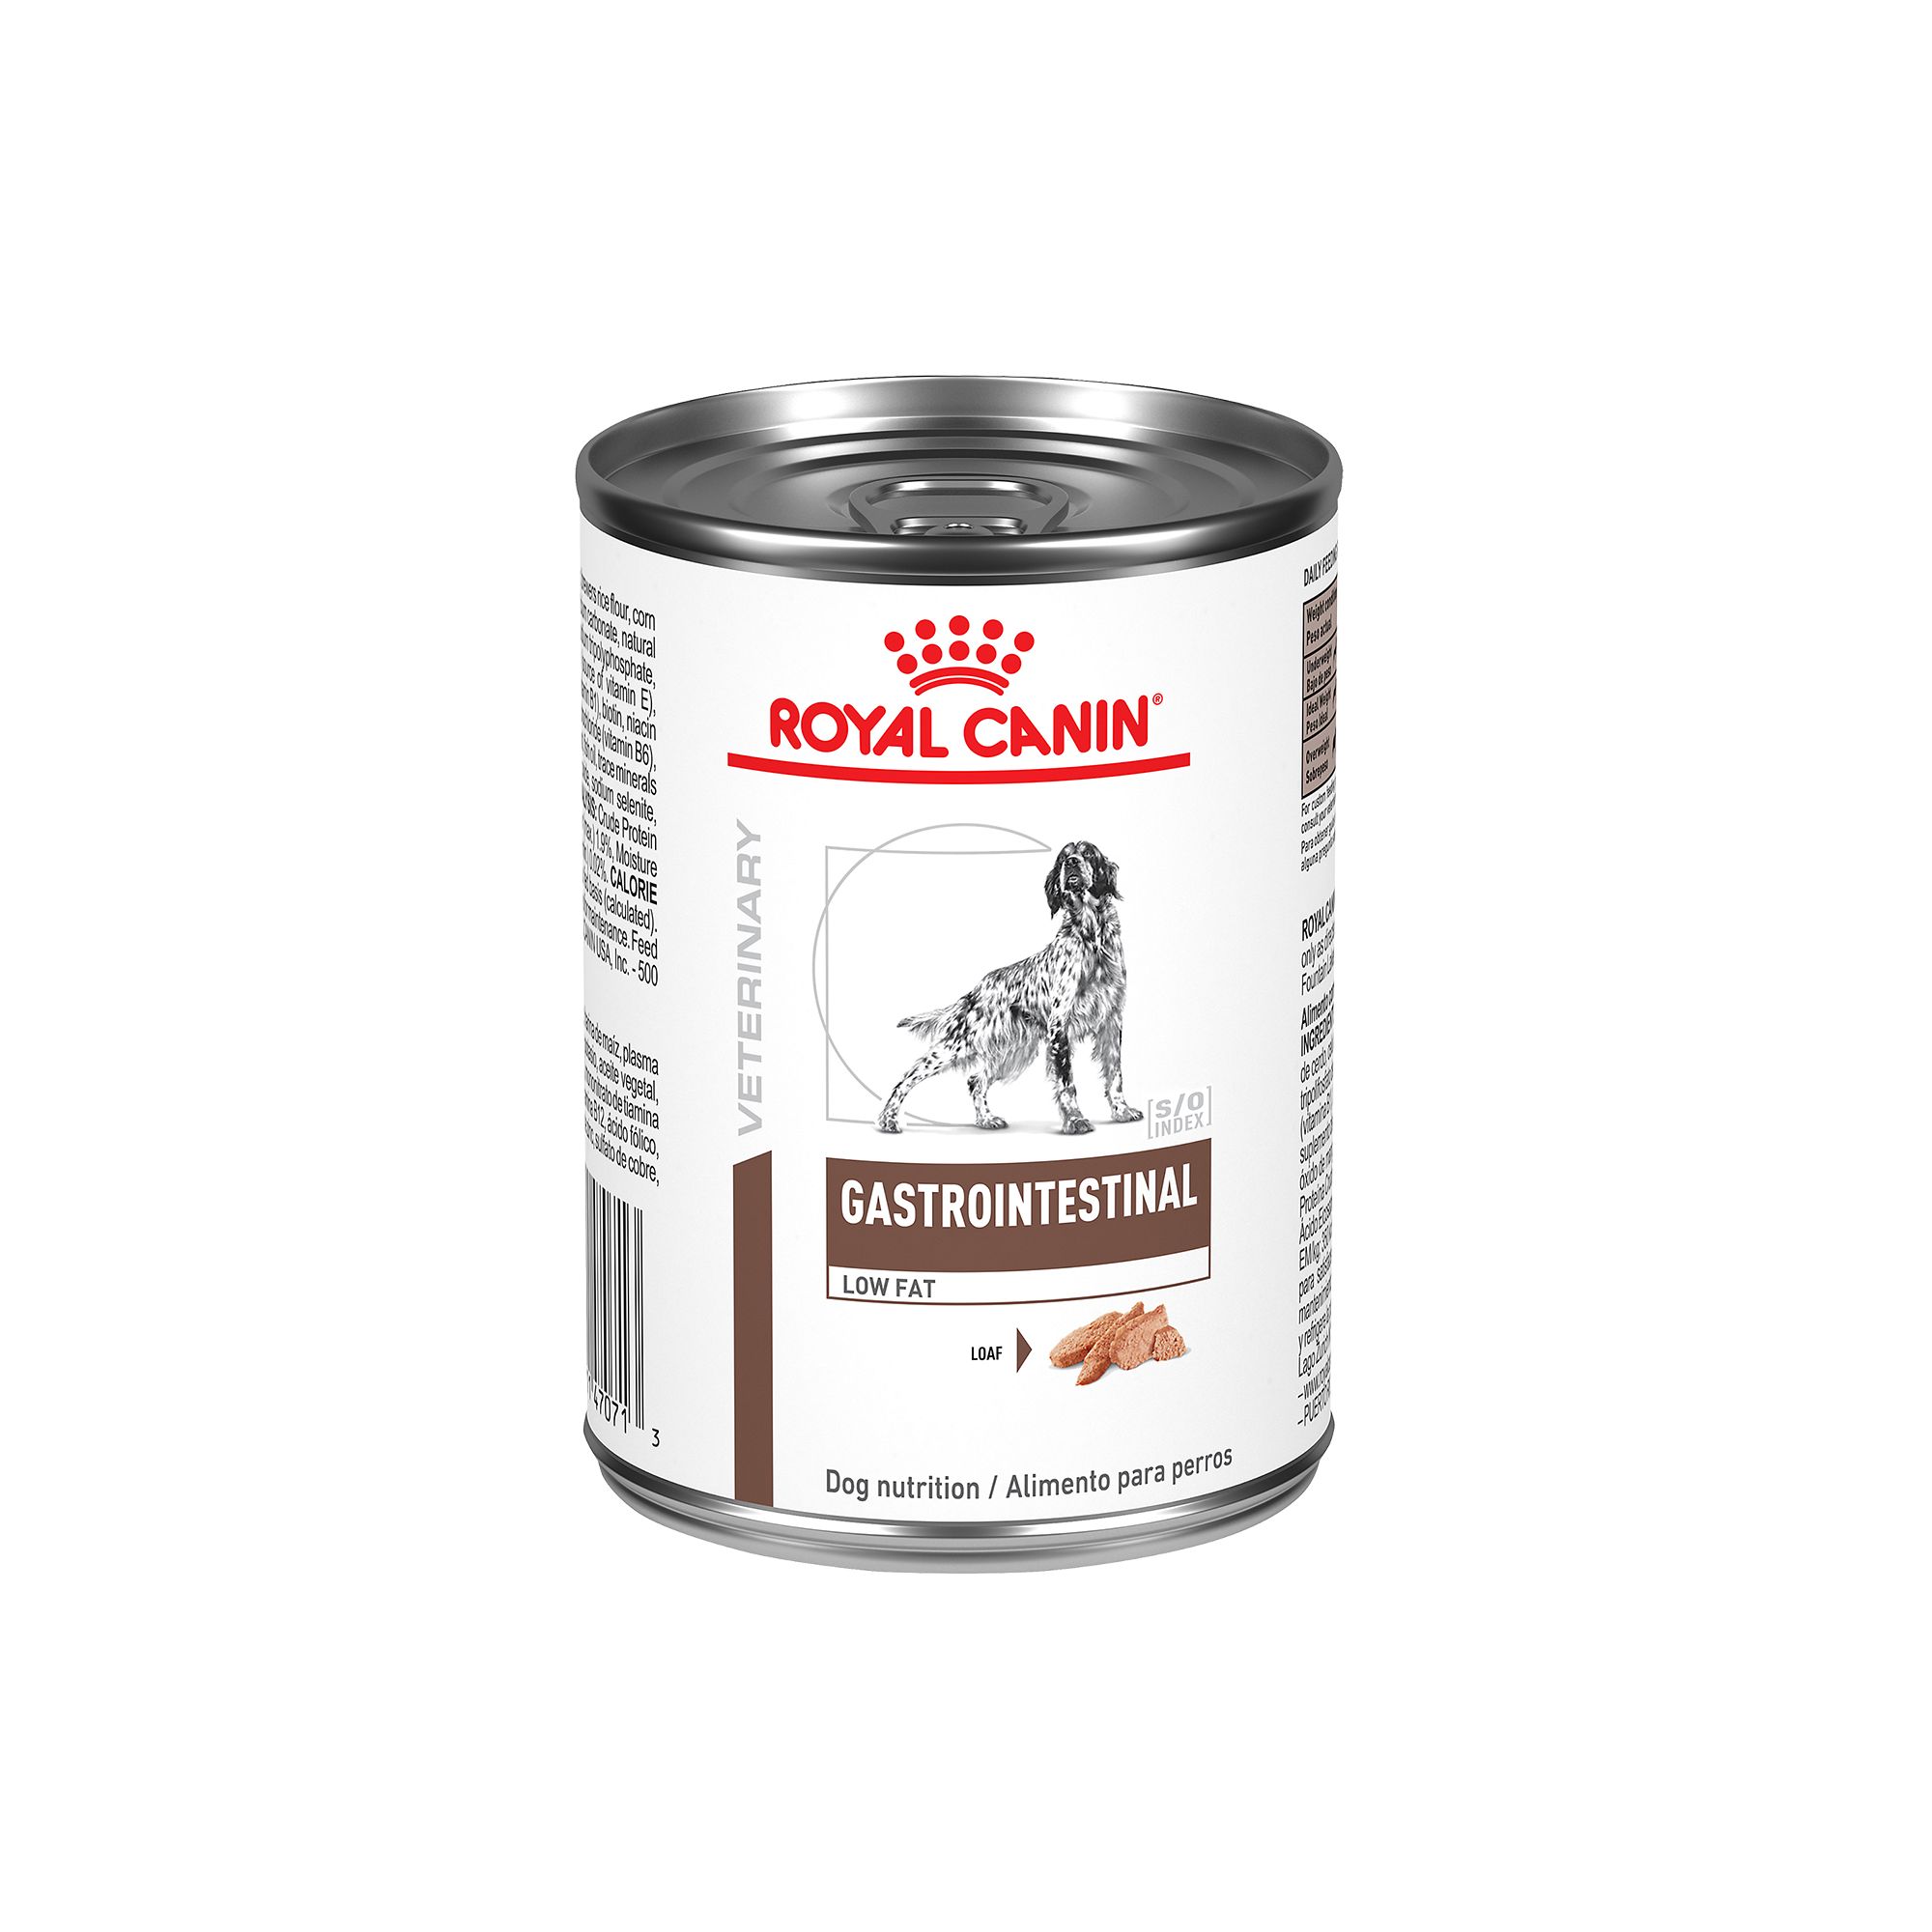 Zie insecten is meer dan globaal Royal Canin® Canned Gastrointestinal Low Fat Dog Food Wet Formula | PetSmart